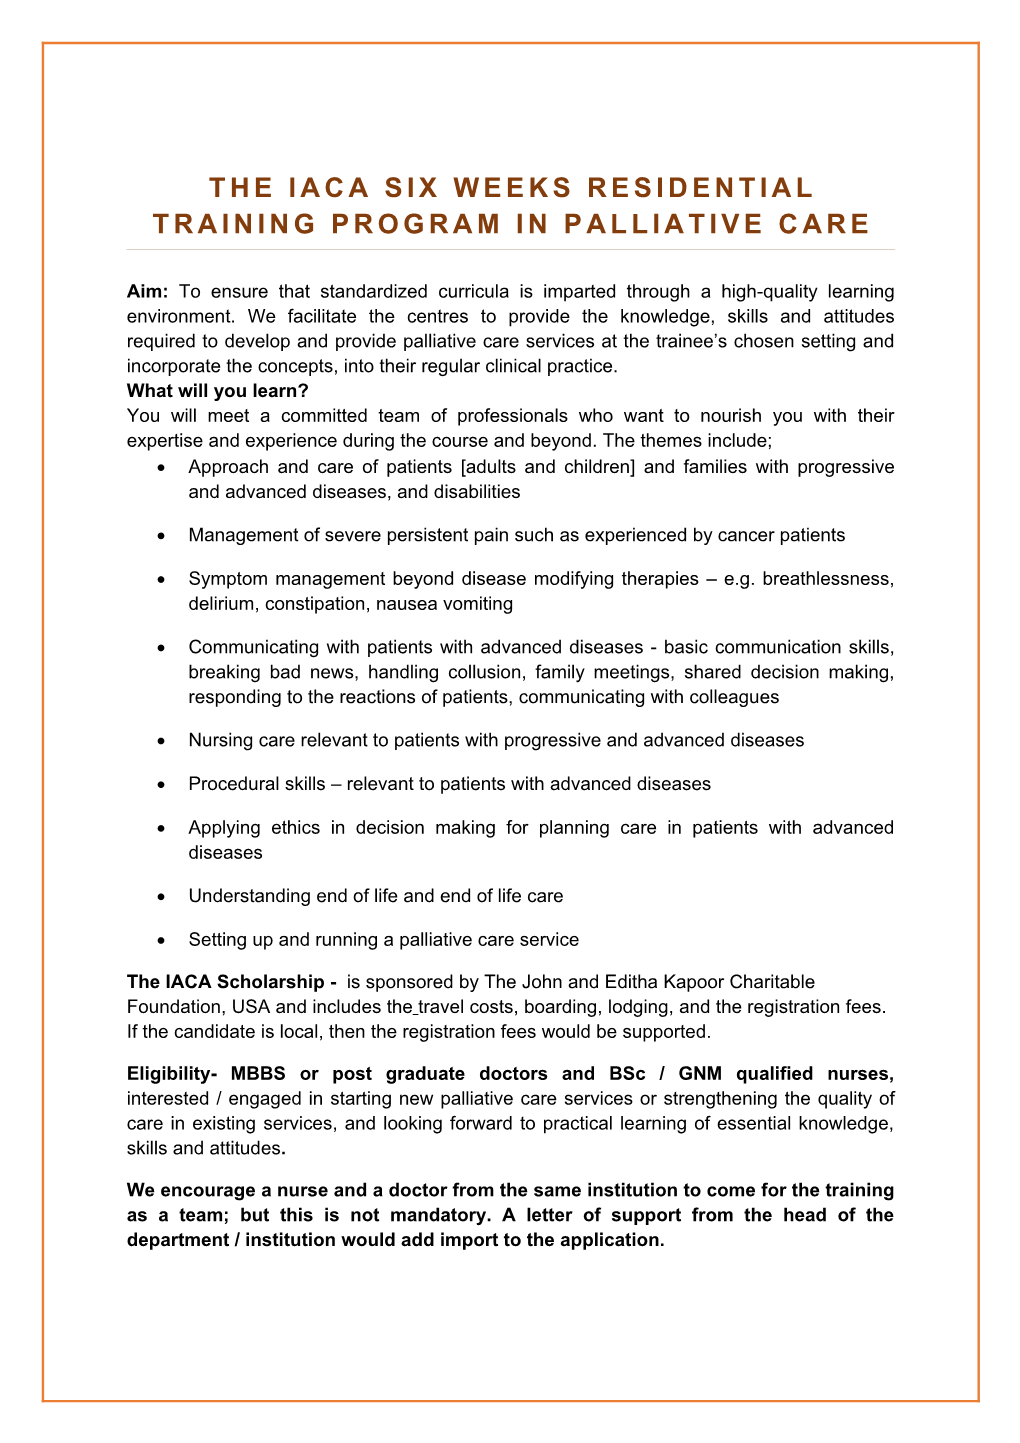 The IACA Six Weeks Residential Training Program in Palliative Care